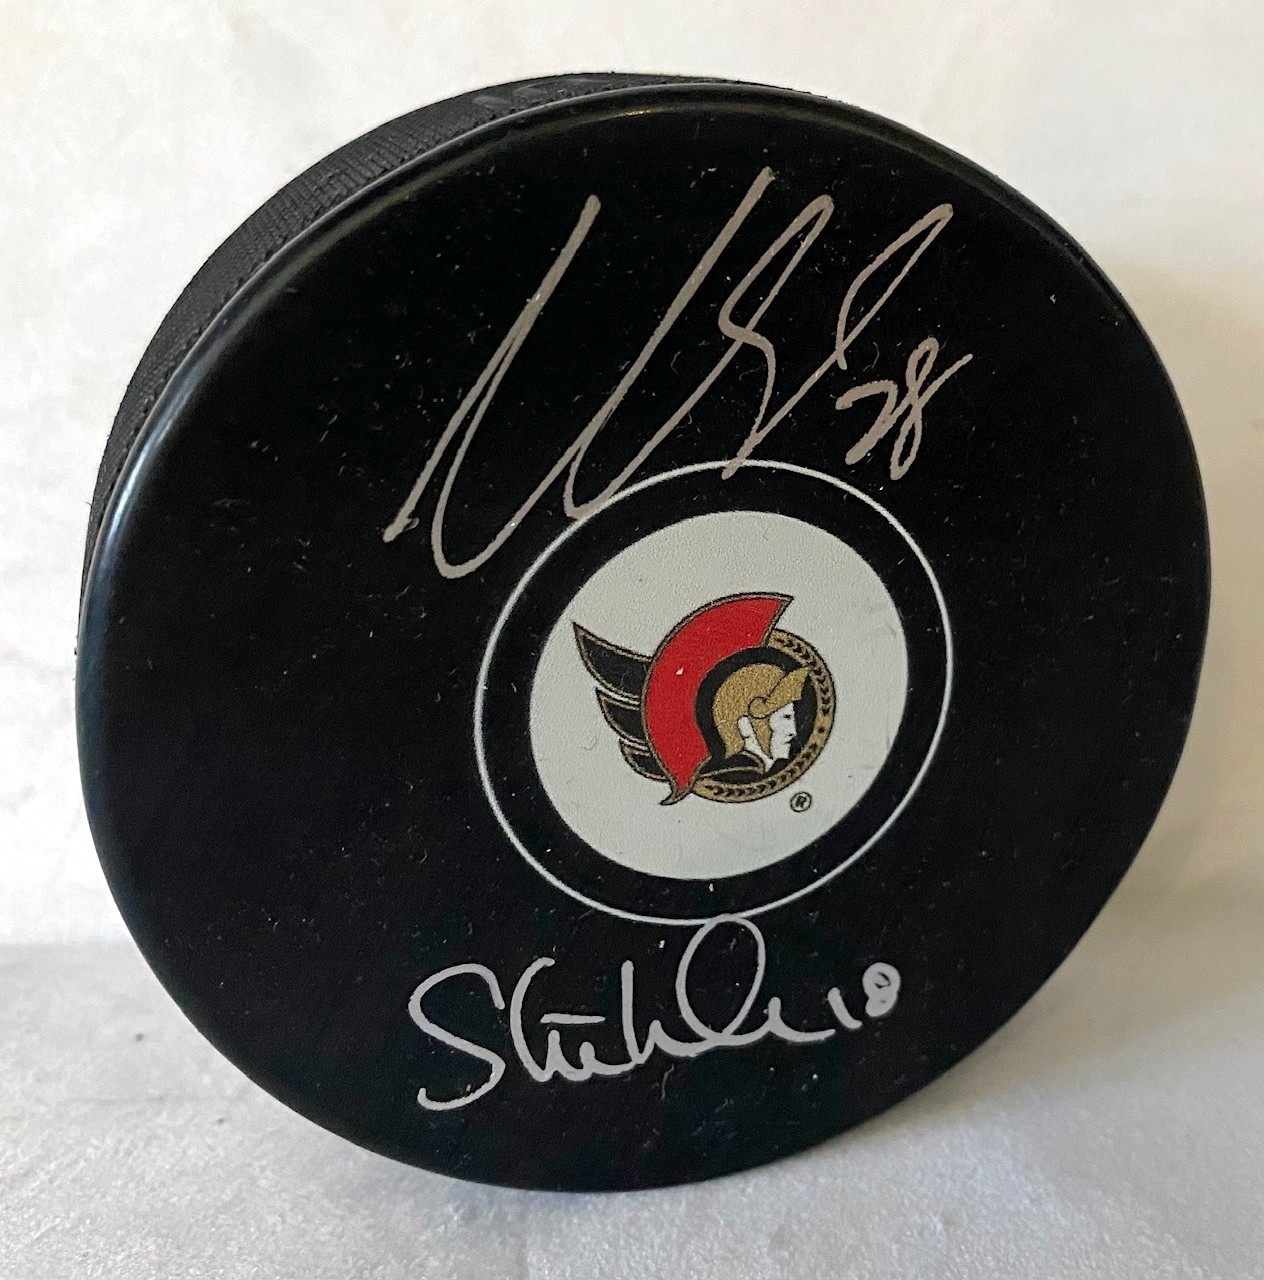 Tim Stutzle & Claude Giroux Dual Signed Ottawa Senators Hockey Puck